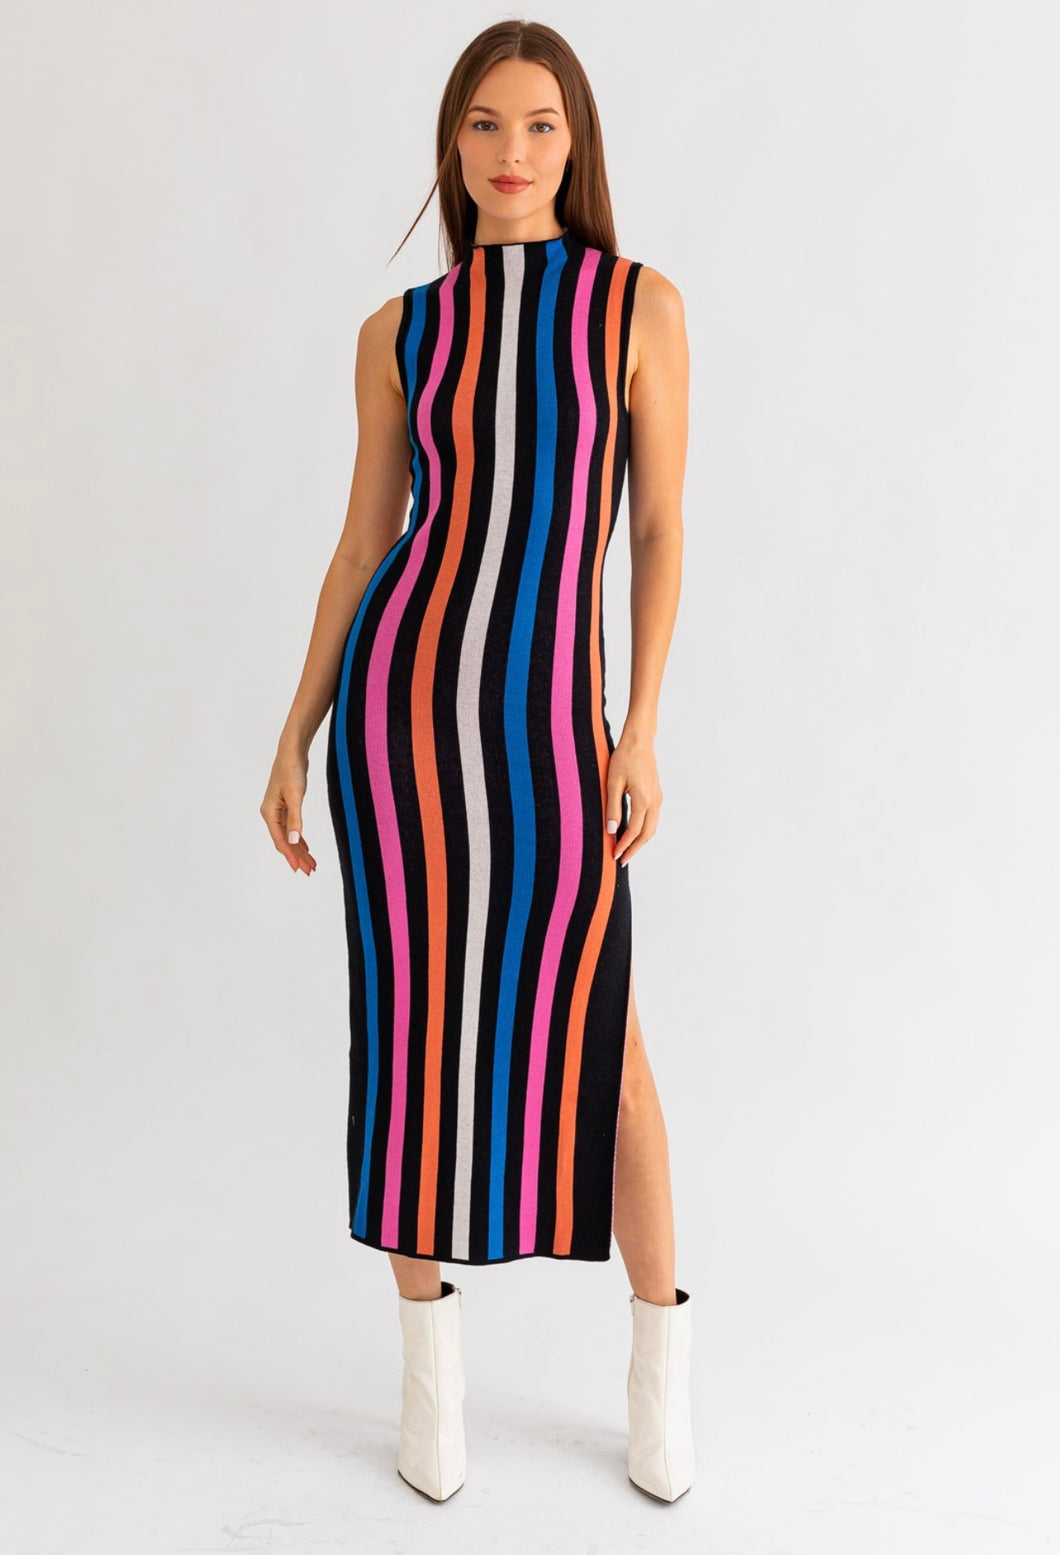 Colorful Sleeveless Dress